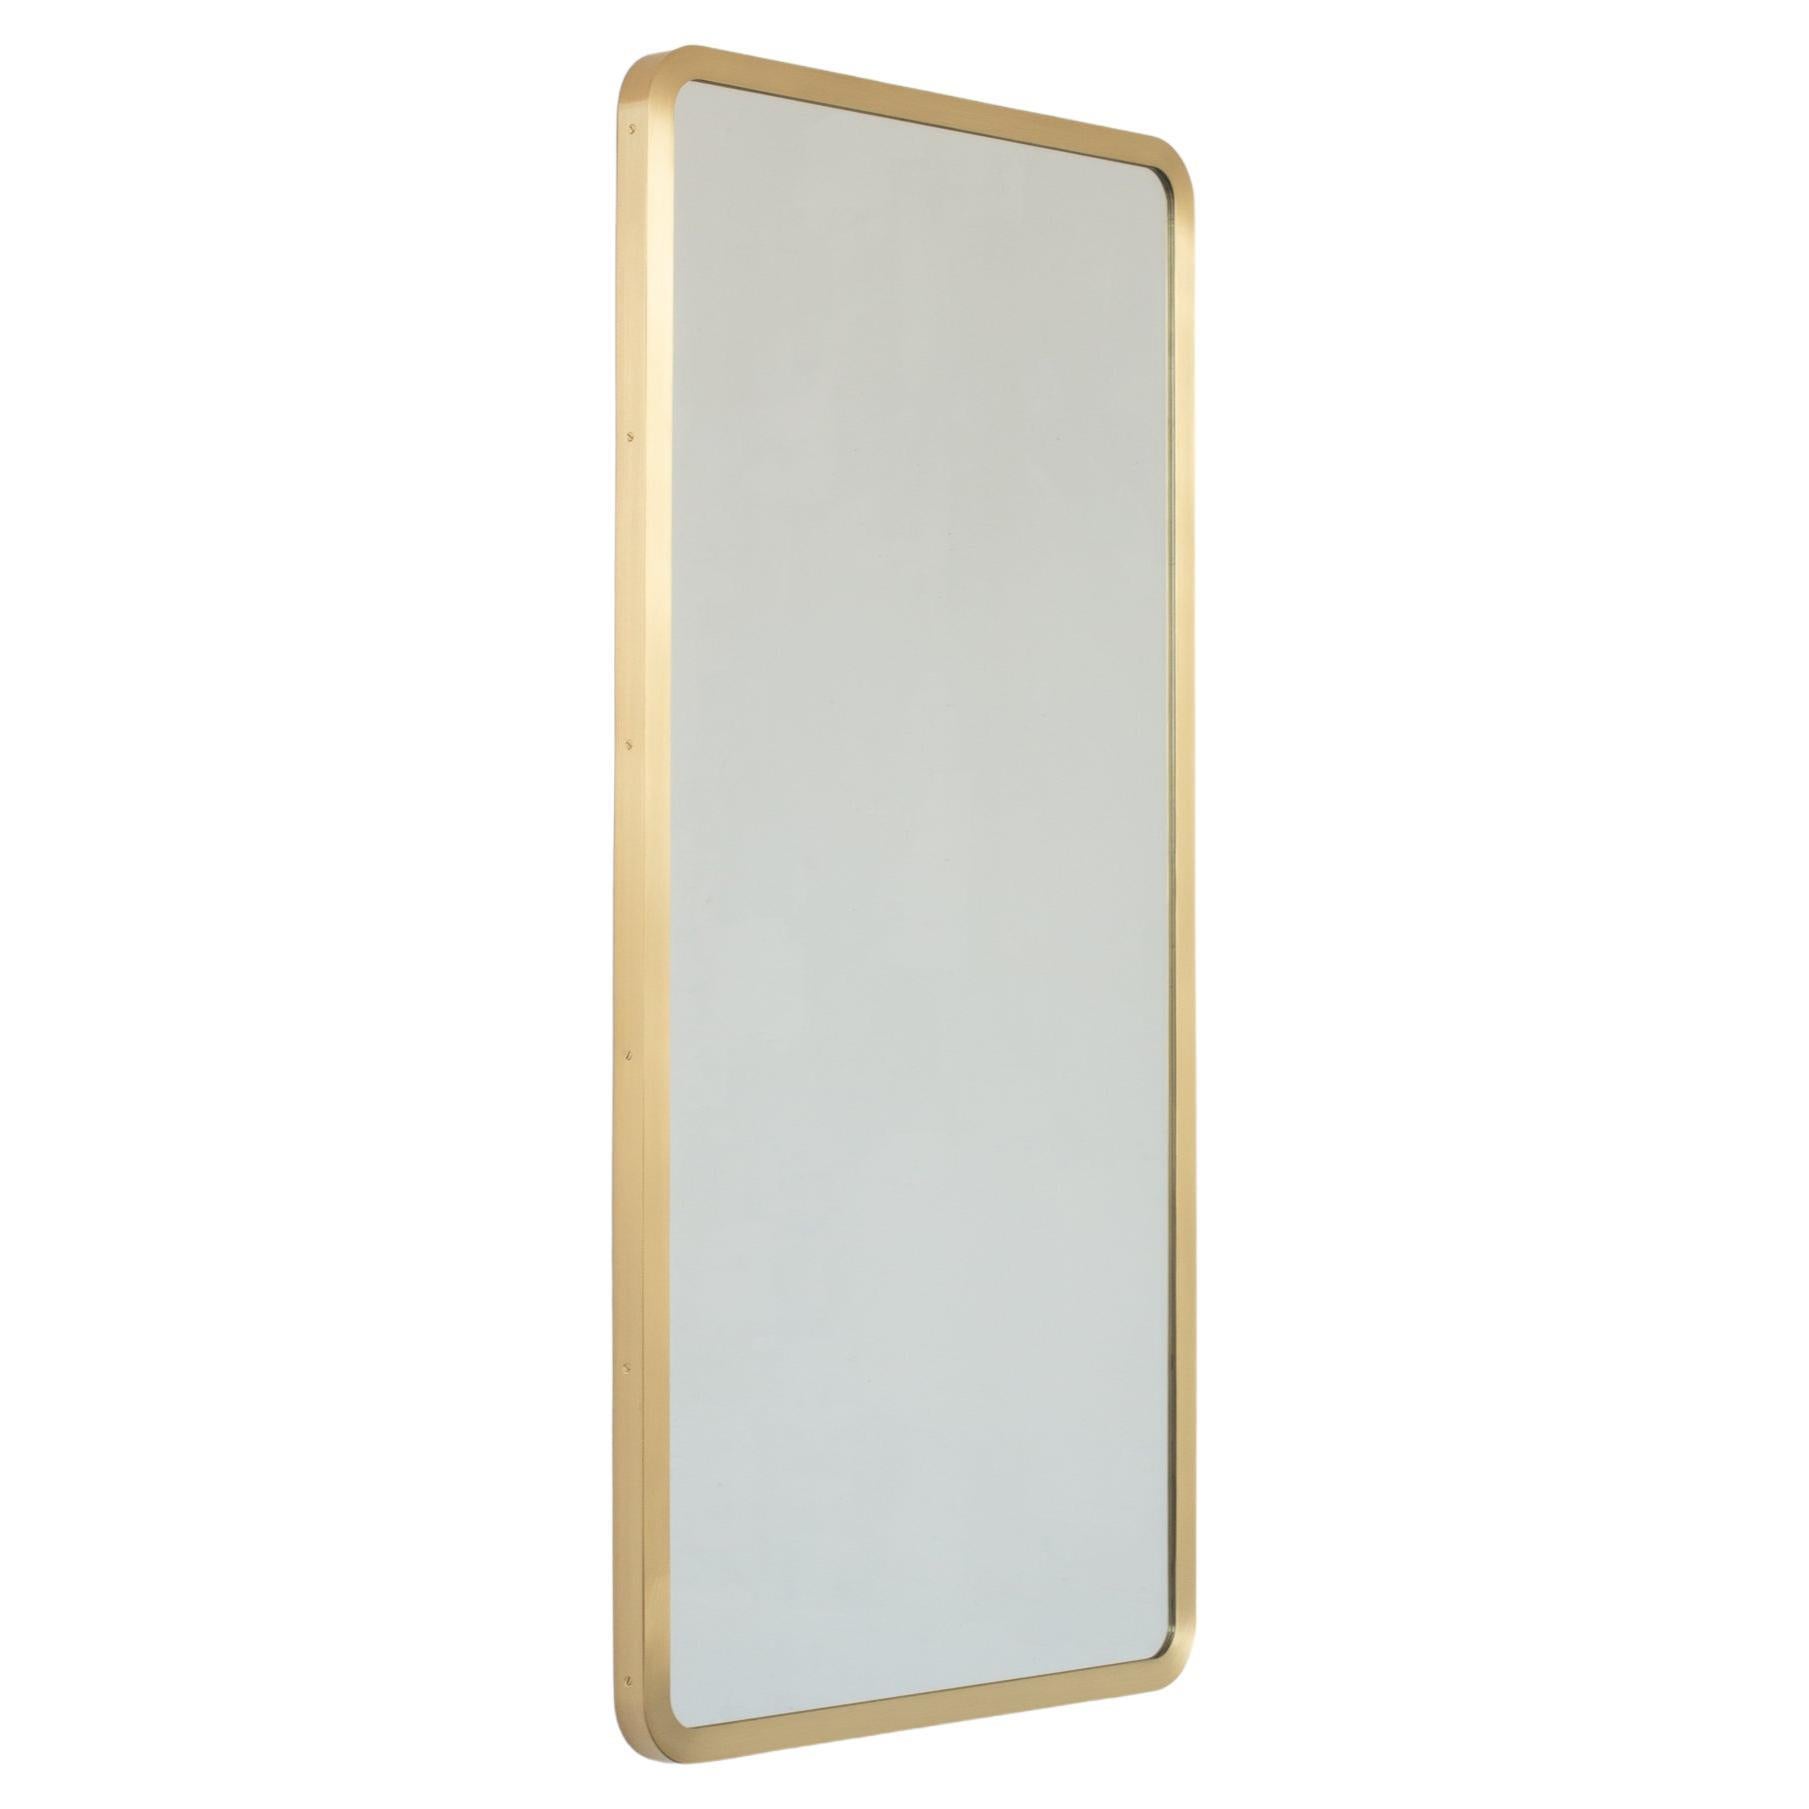 Quadris Rectangular Contemporary Mirror with a Full Front Brass Frame, Medium